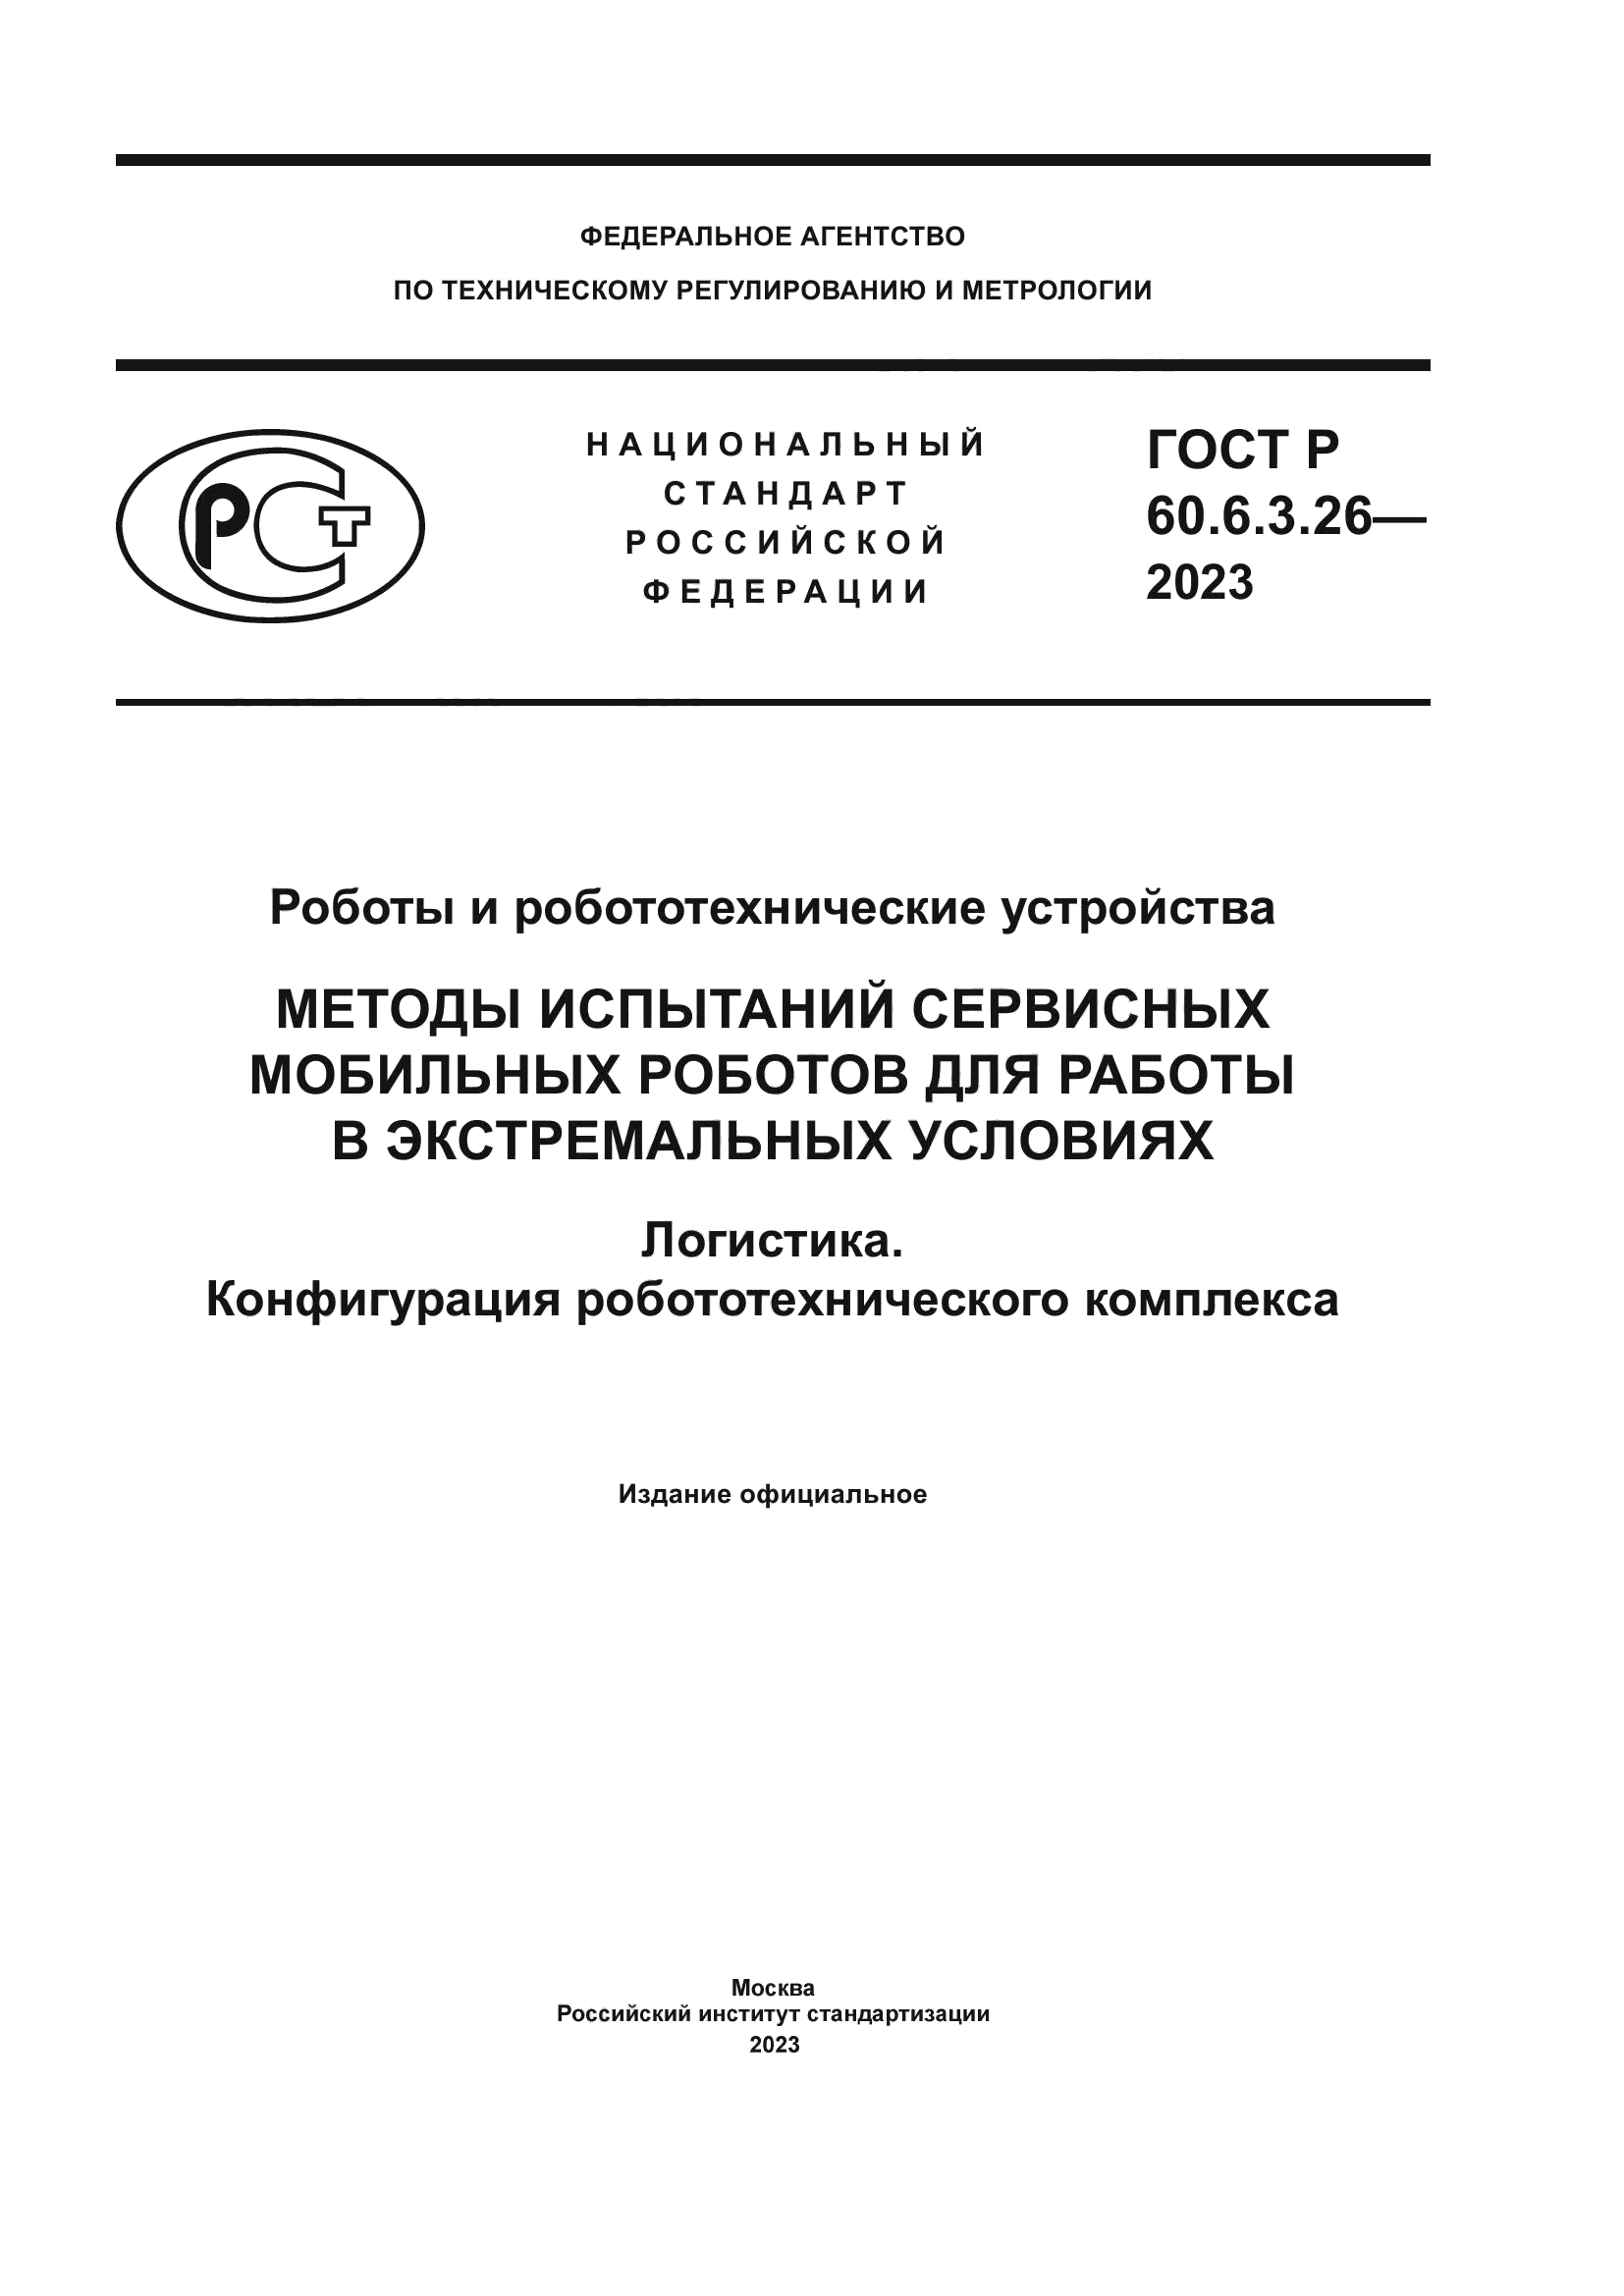 ГОСТ Р 60.6.3.26-2023